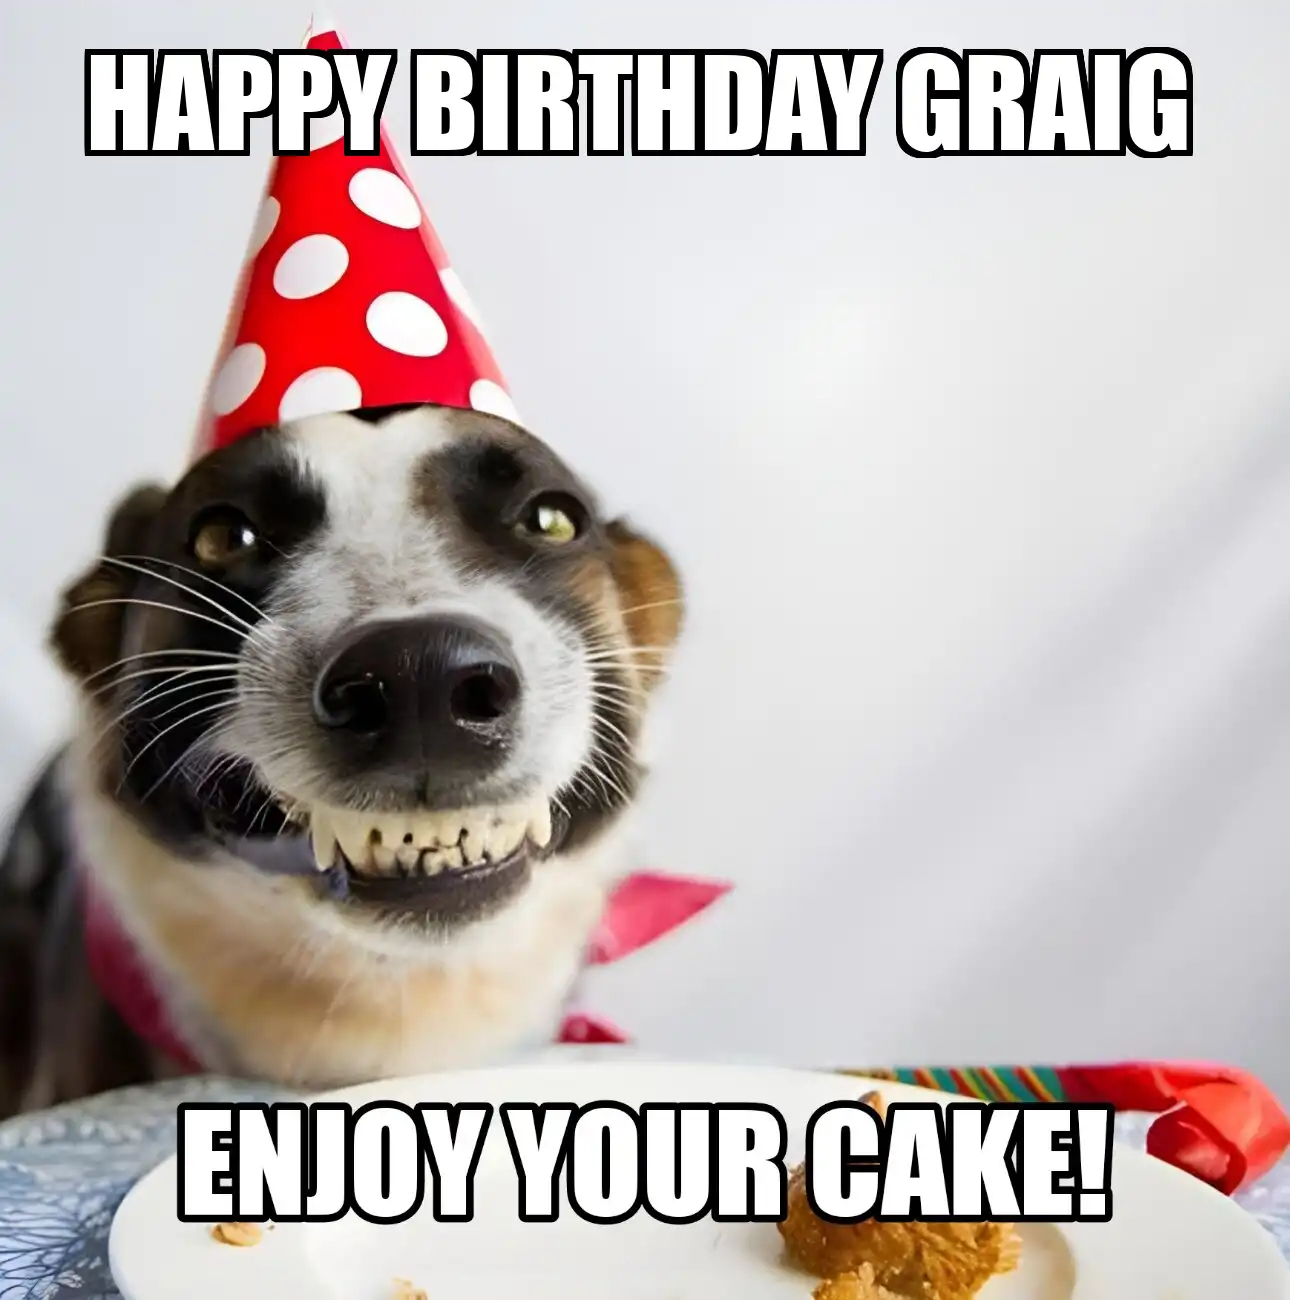 Happy Birthday Graig Enjoy Your Cake Dog Meme